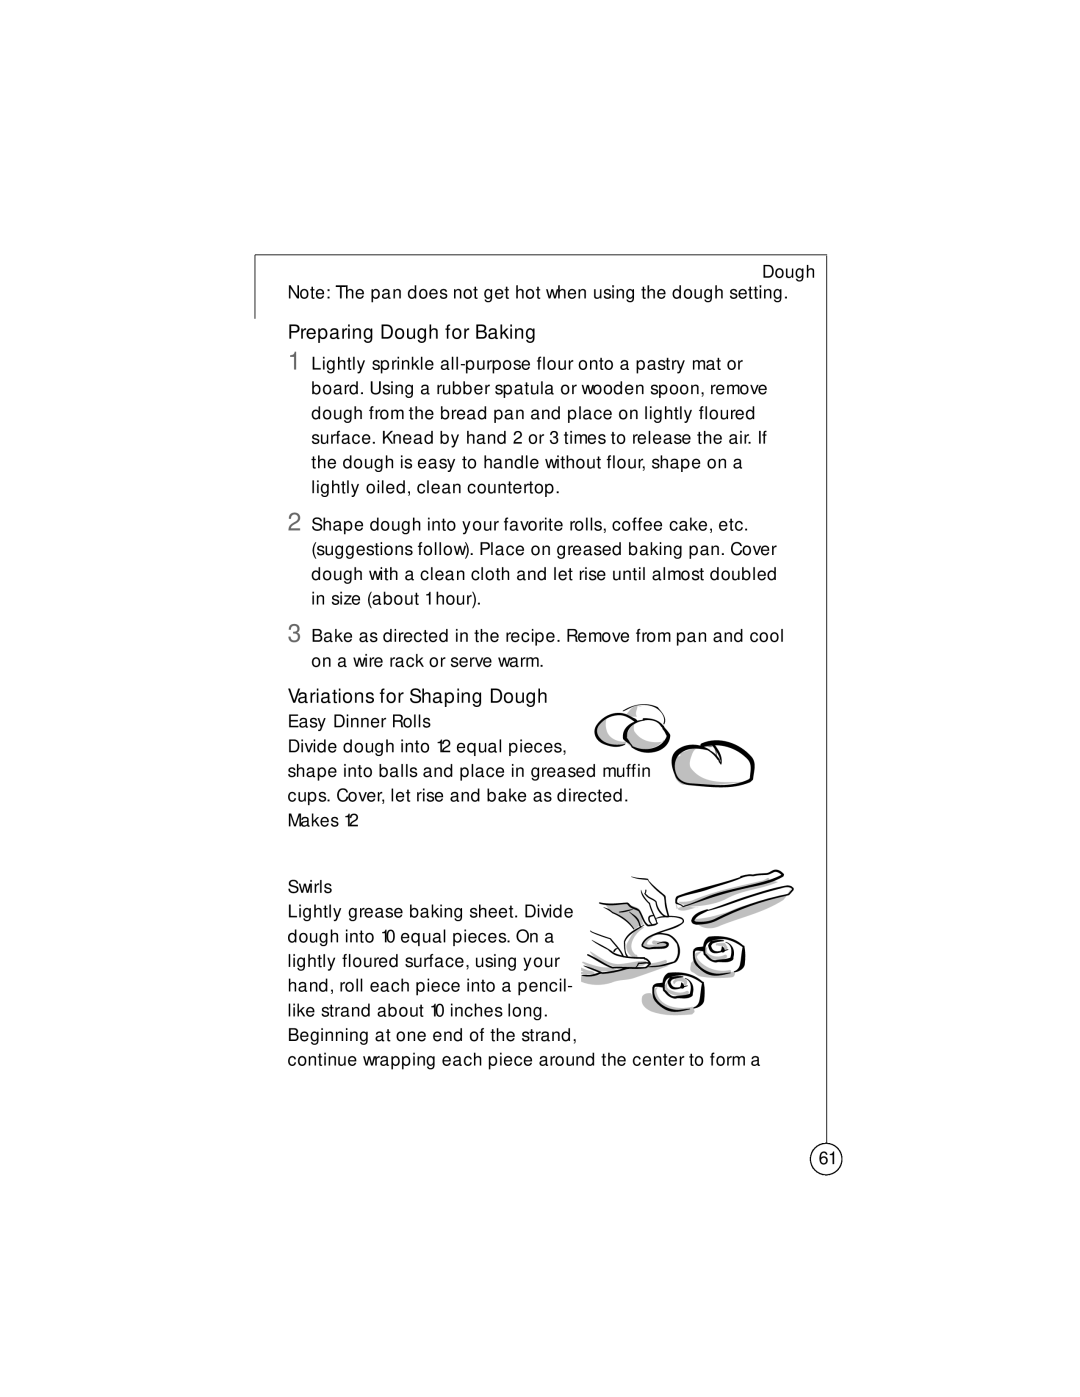 Sunbeam 102817, 5834 user manual Preparing Dough for Baking, Variations for Shaping Dough 